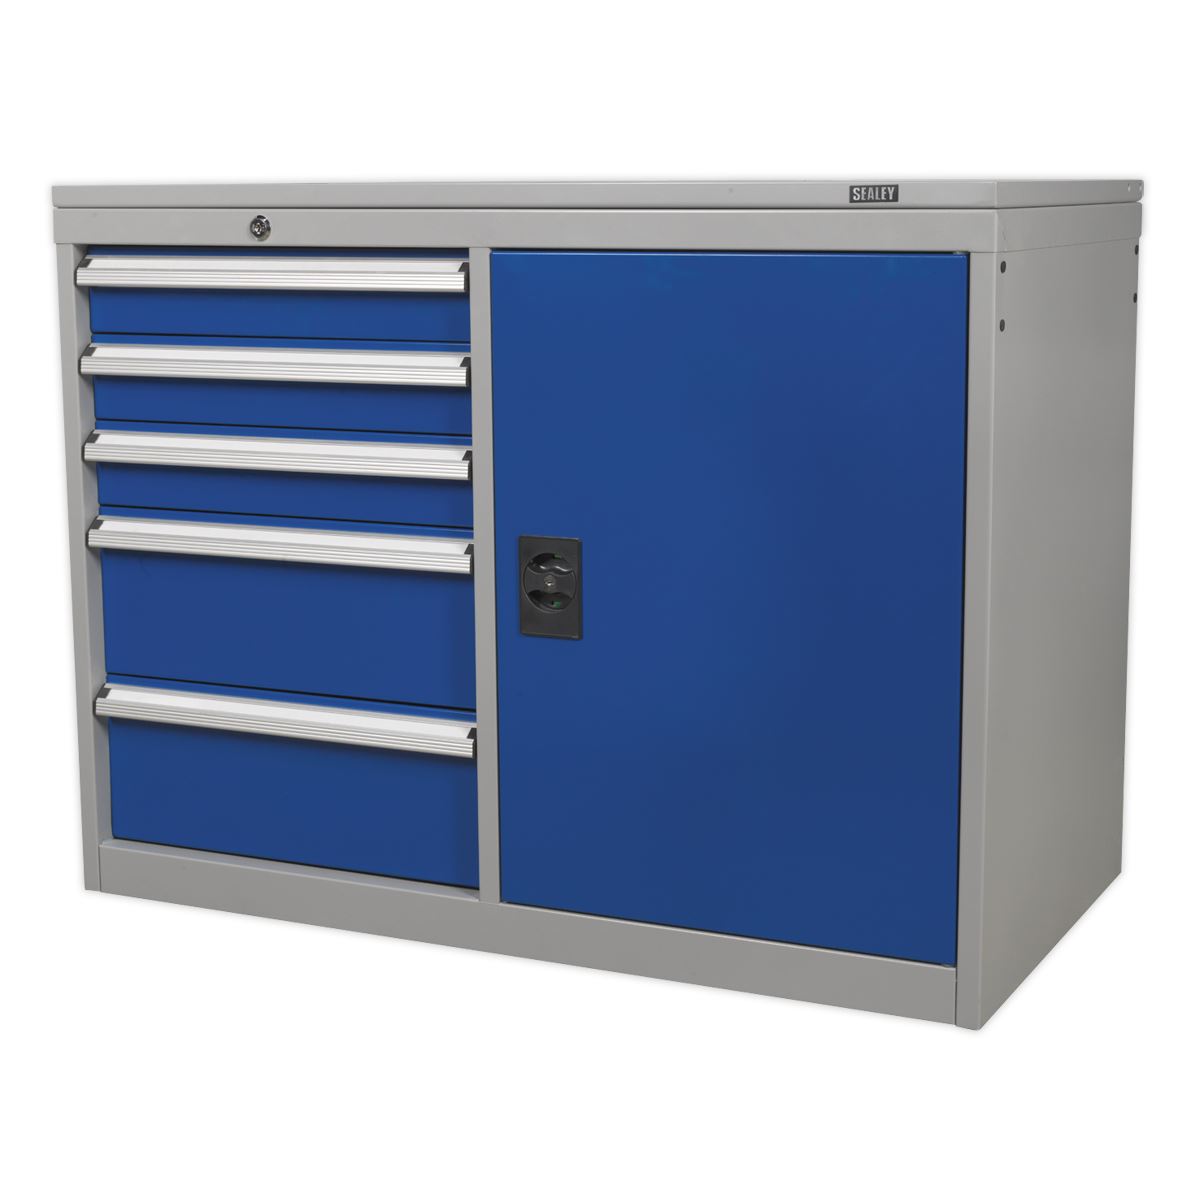 Sealey Premier Industrial Industrial Cabinet/Workstation 5 Drawer & 1 Shelf Locker